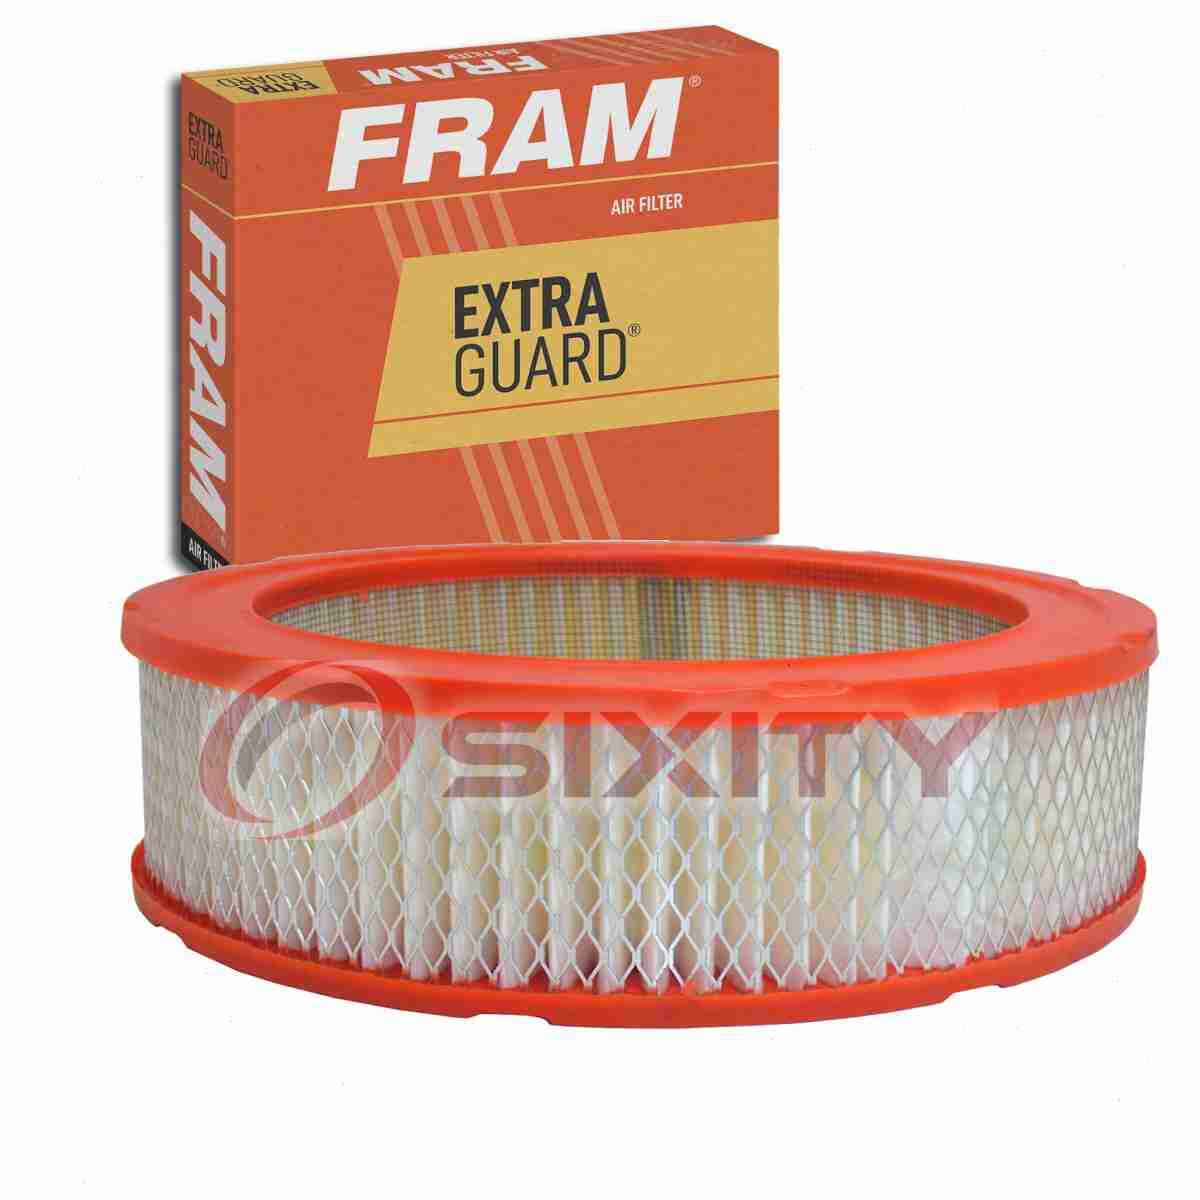 FRAM Extra Guard Air Filter for 1971-1978 American Motors Matador Intake hh